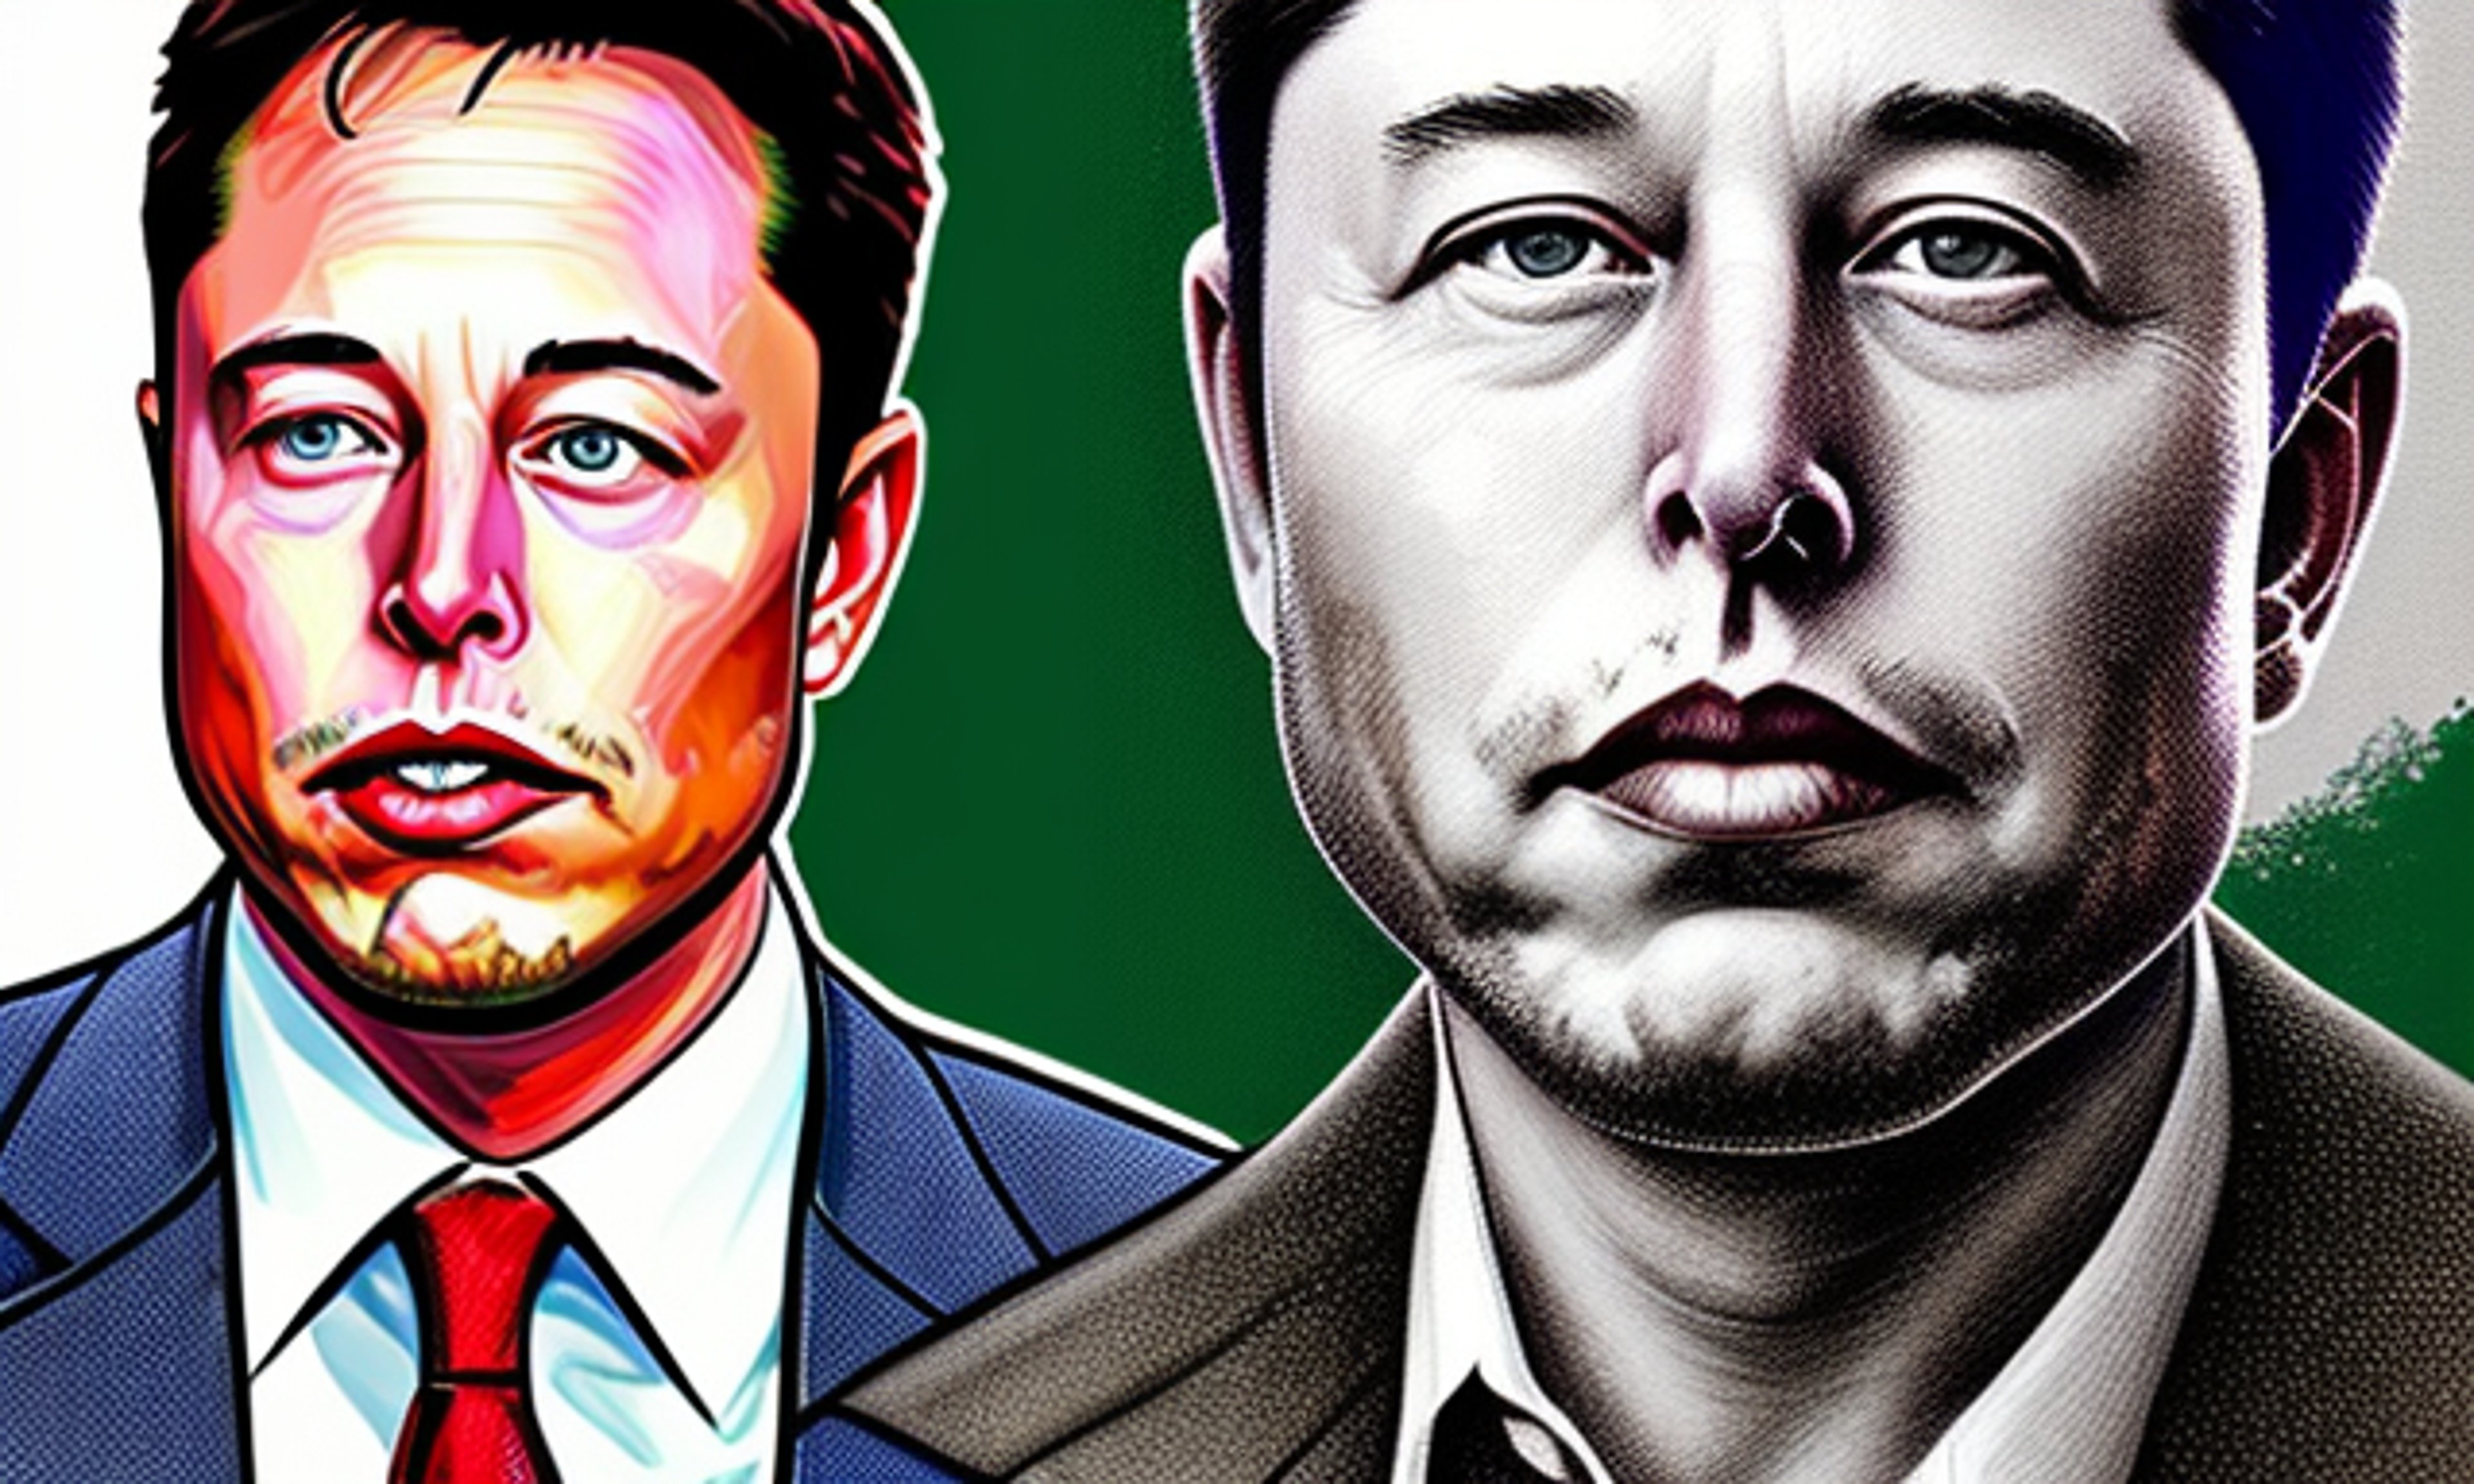 U.S. Virgin Islands Subpoenas Elon Musk in JPMorgan Chase Lawsuit Linked to Jeffrey Epstein